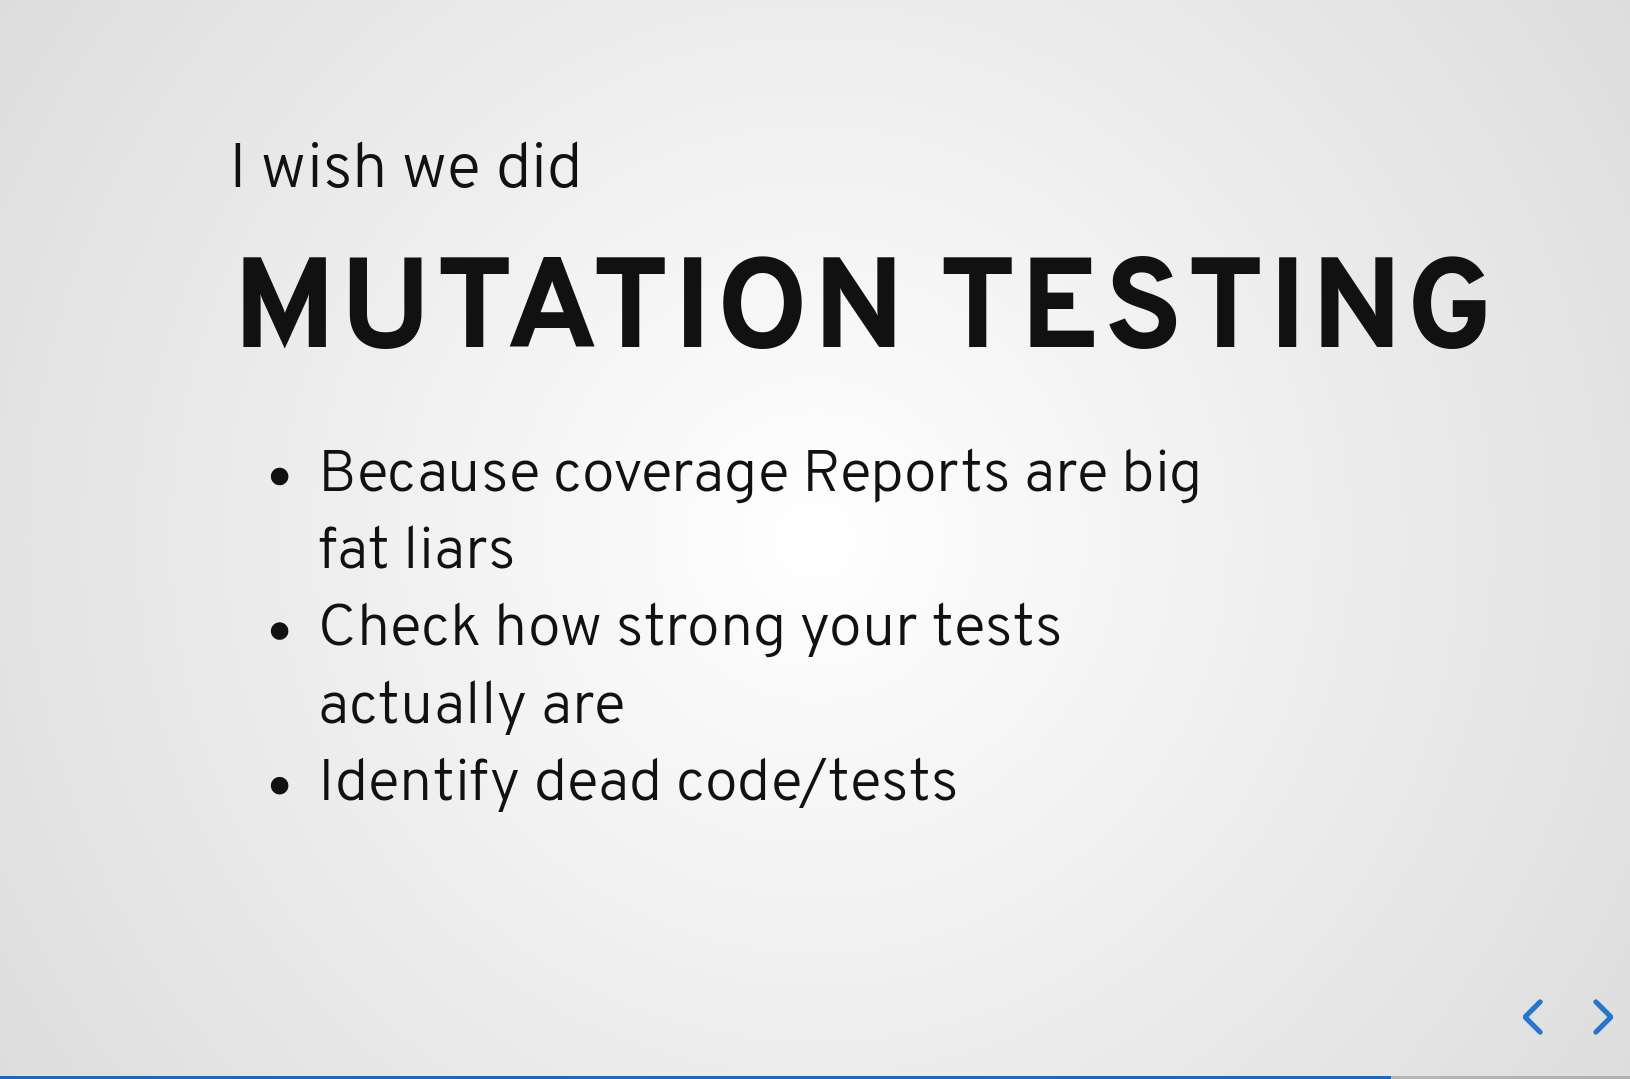 I wish we did: Mutation Testing